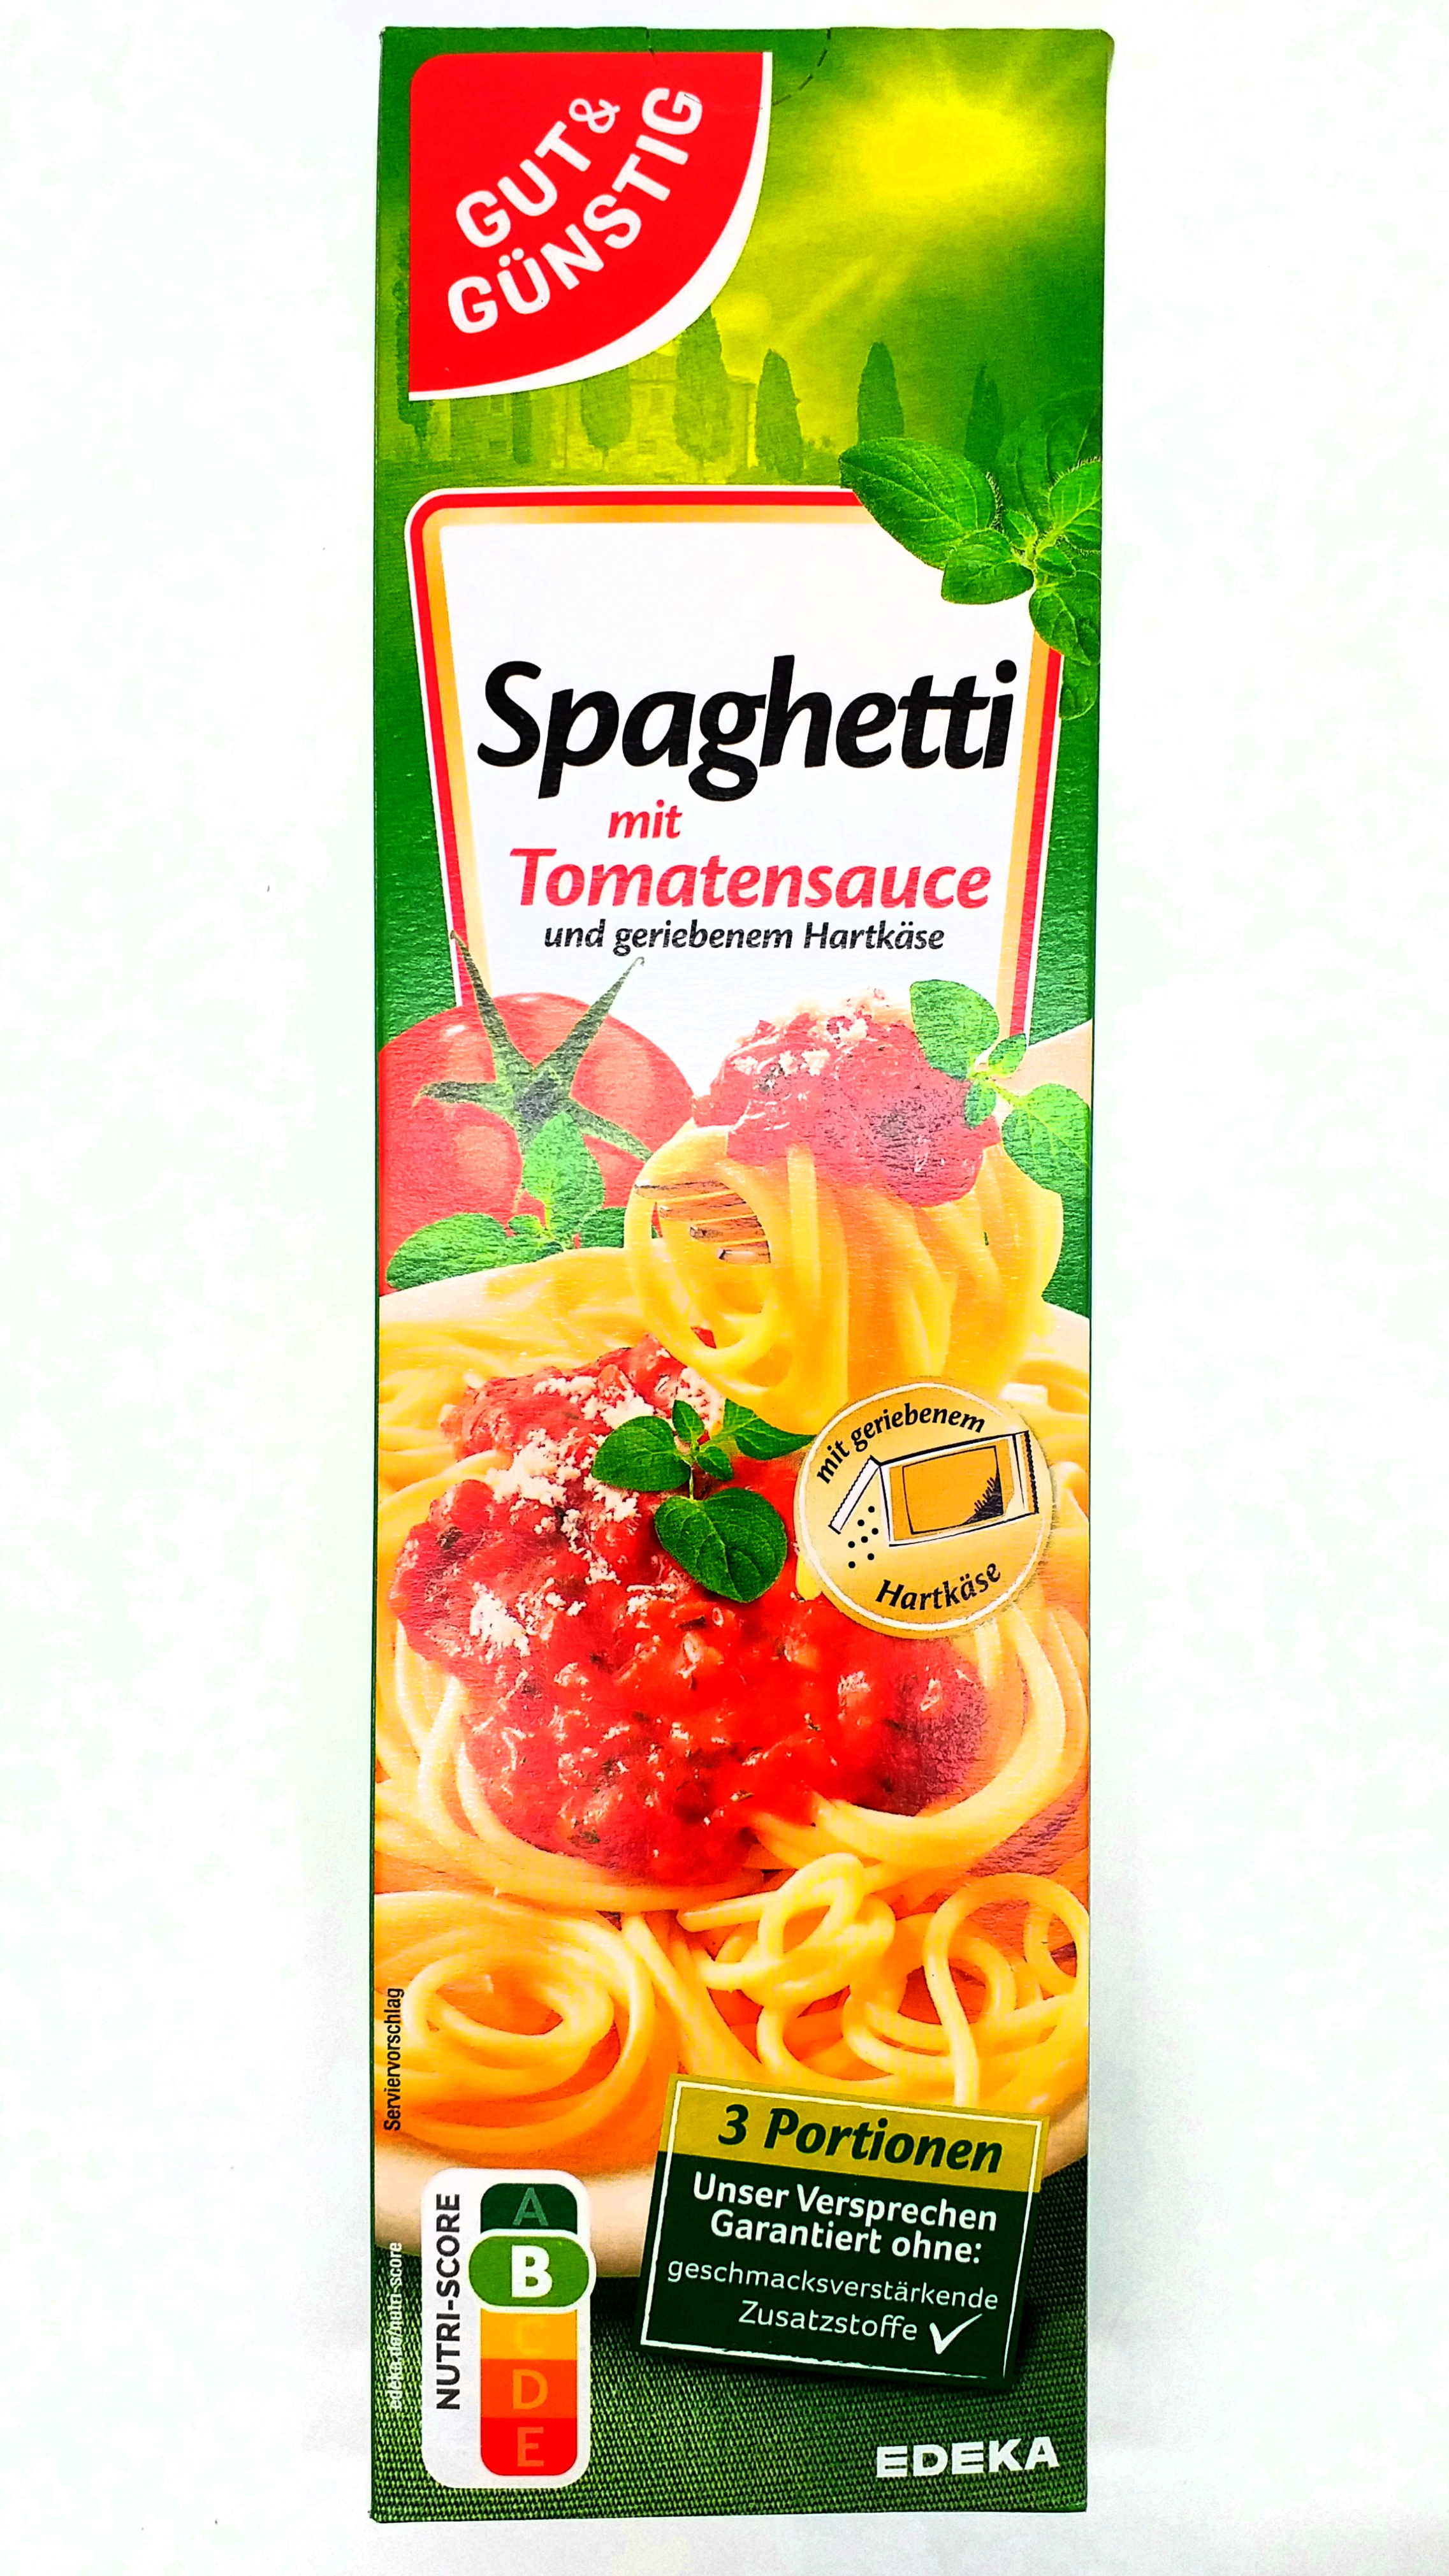 G&G Spaghetti mit Tomatensauce 397g